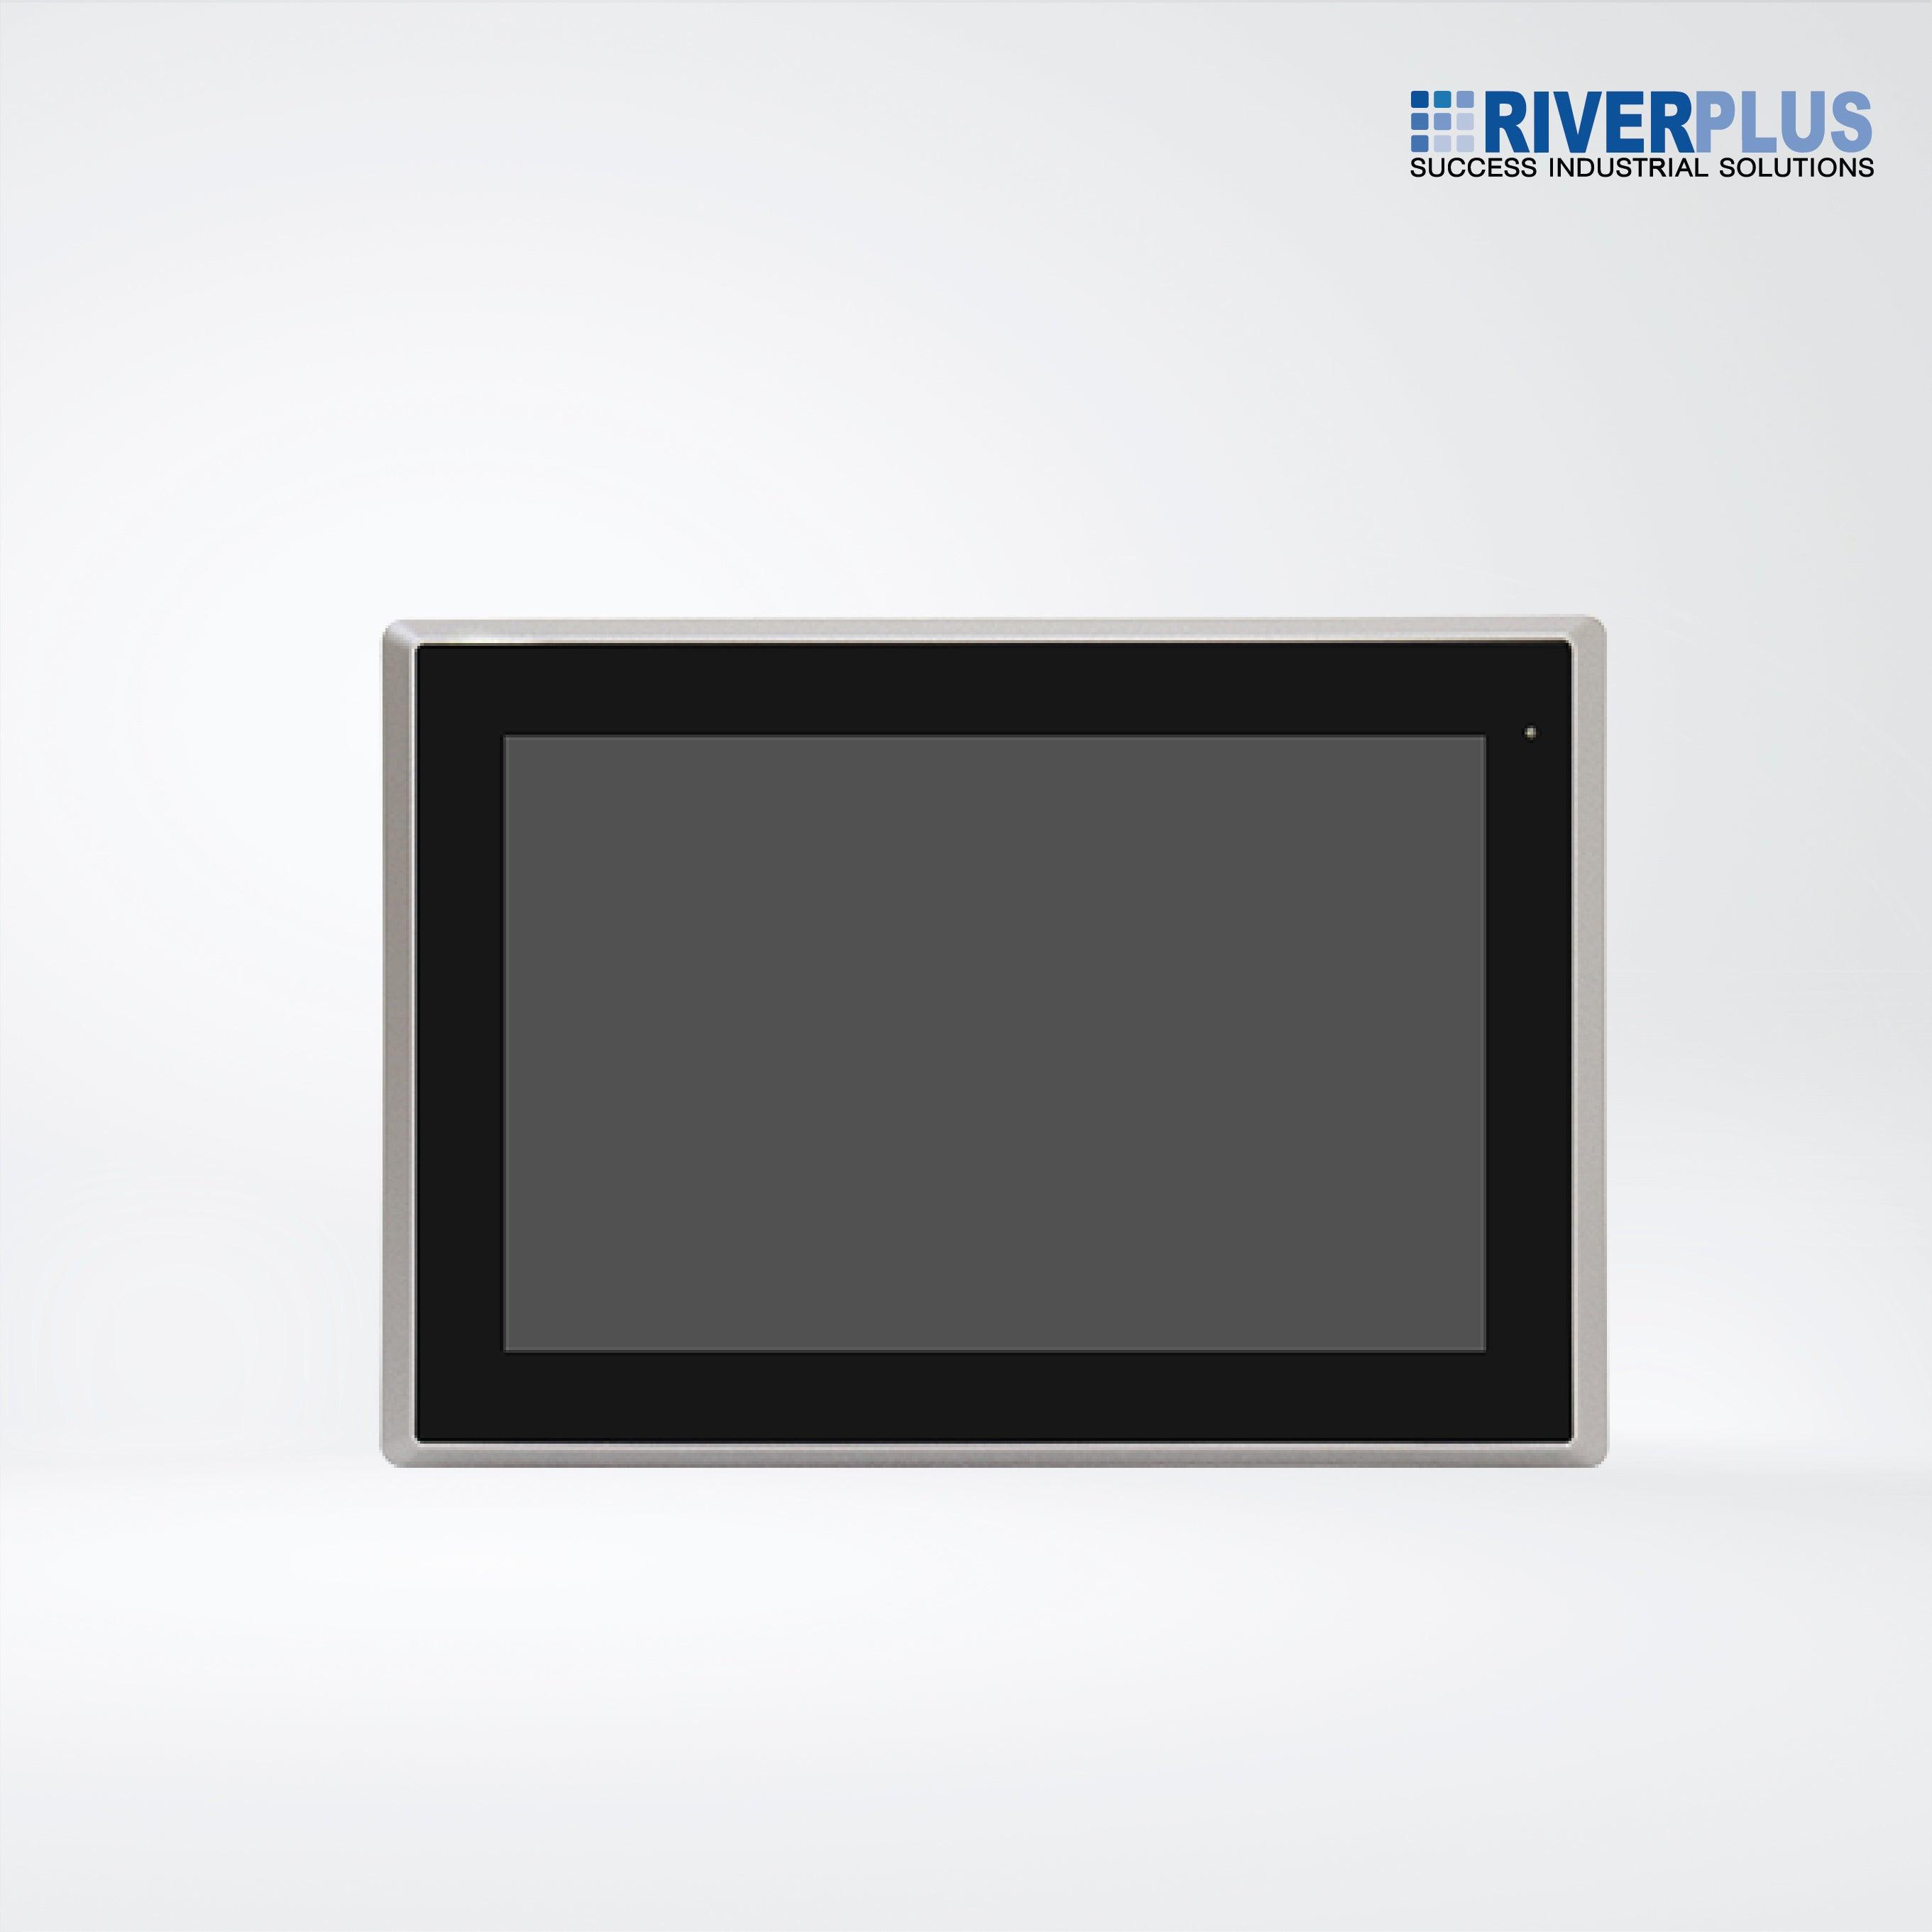 ARCDIS-112WAPRG(H) 12.1" Wide Front Panel IP66 Aluminum Die-casting Display - Riverplus